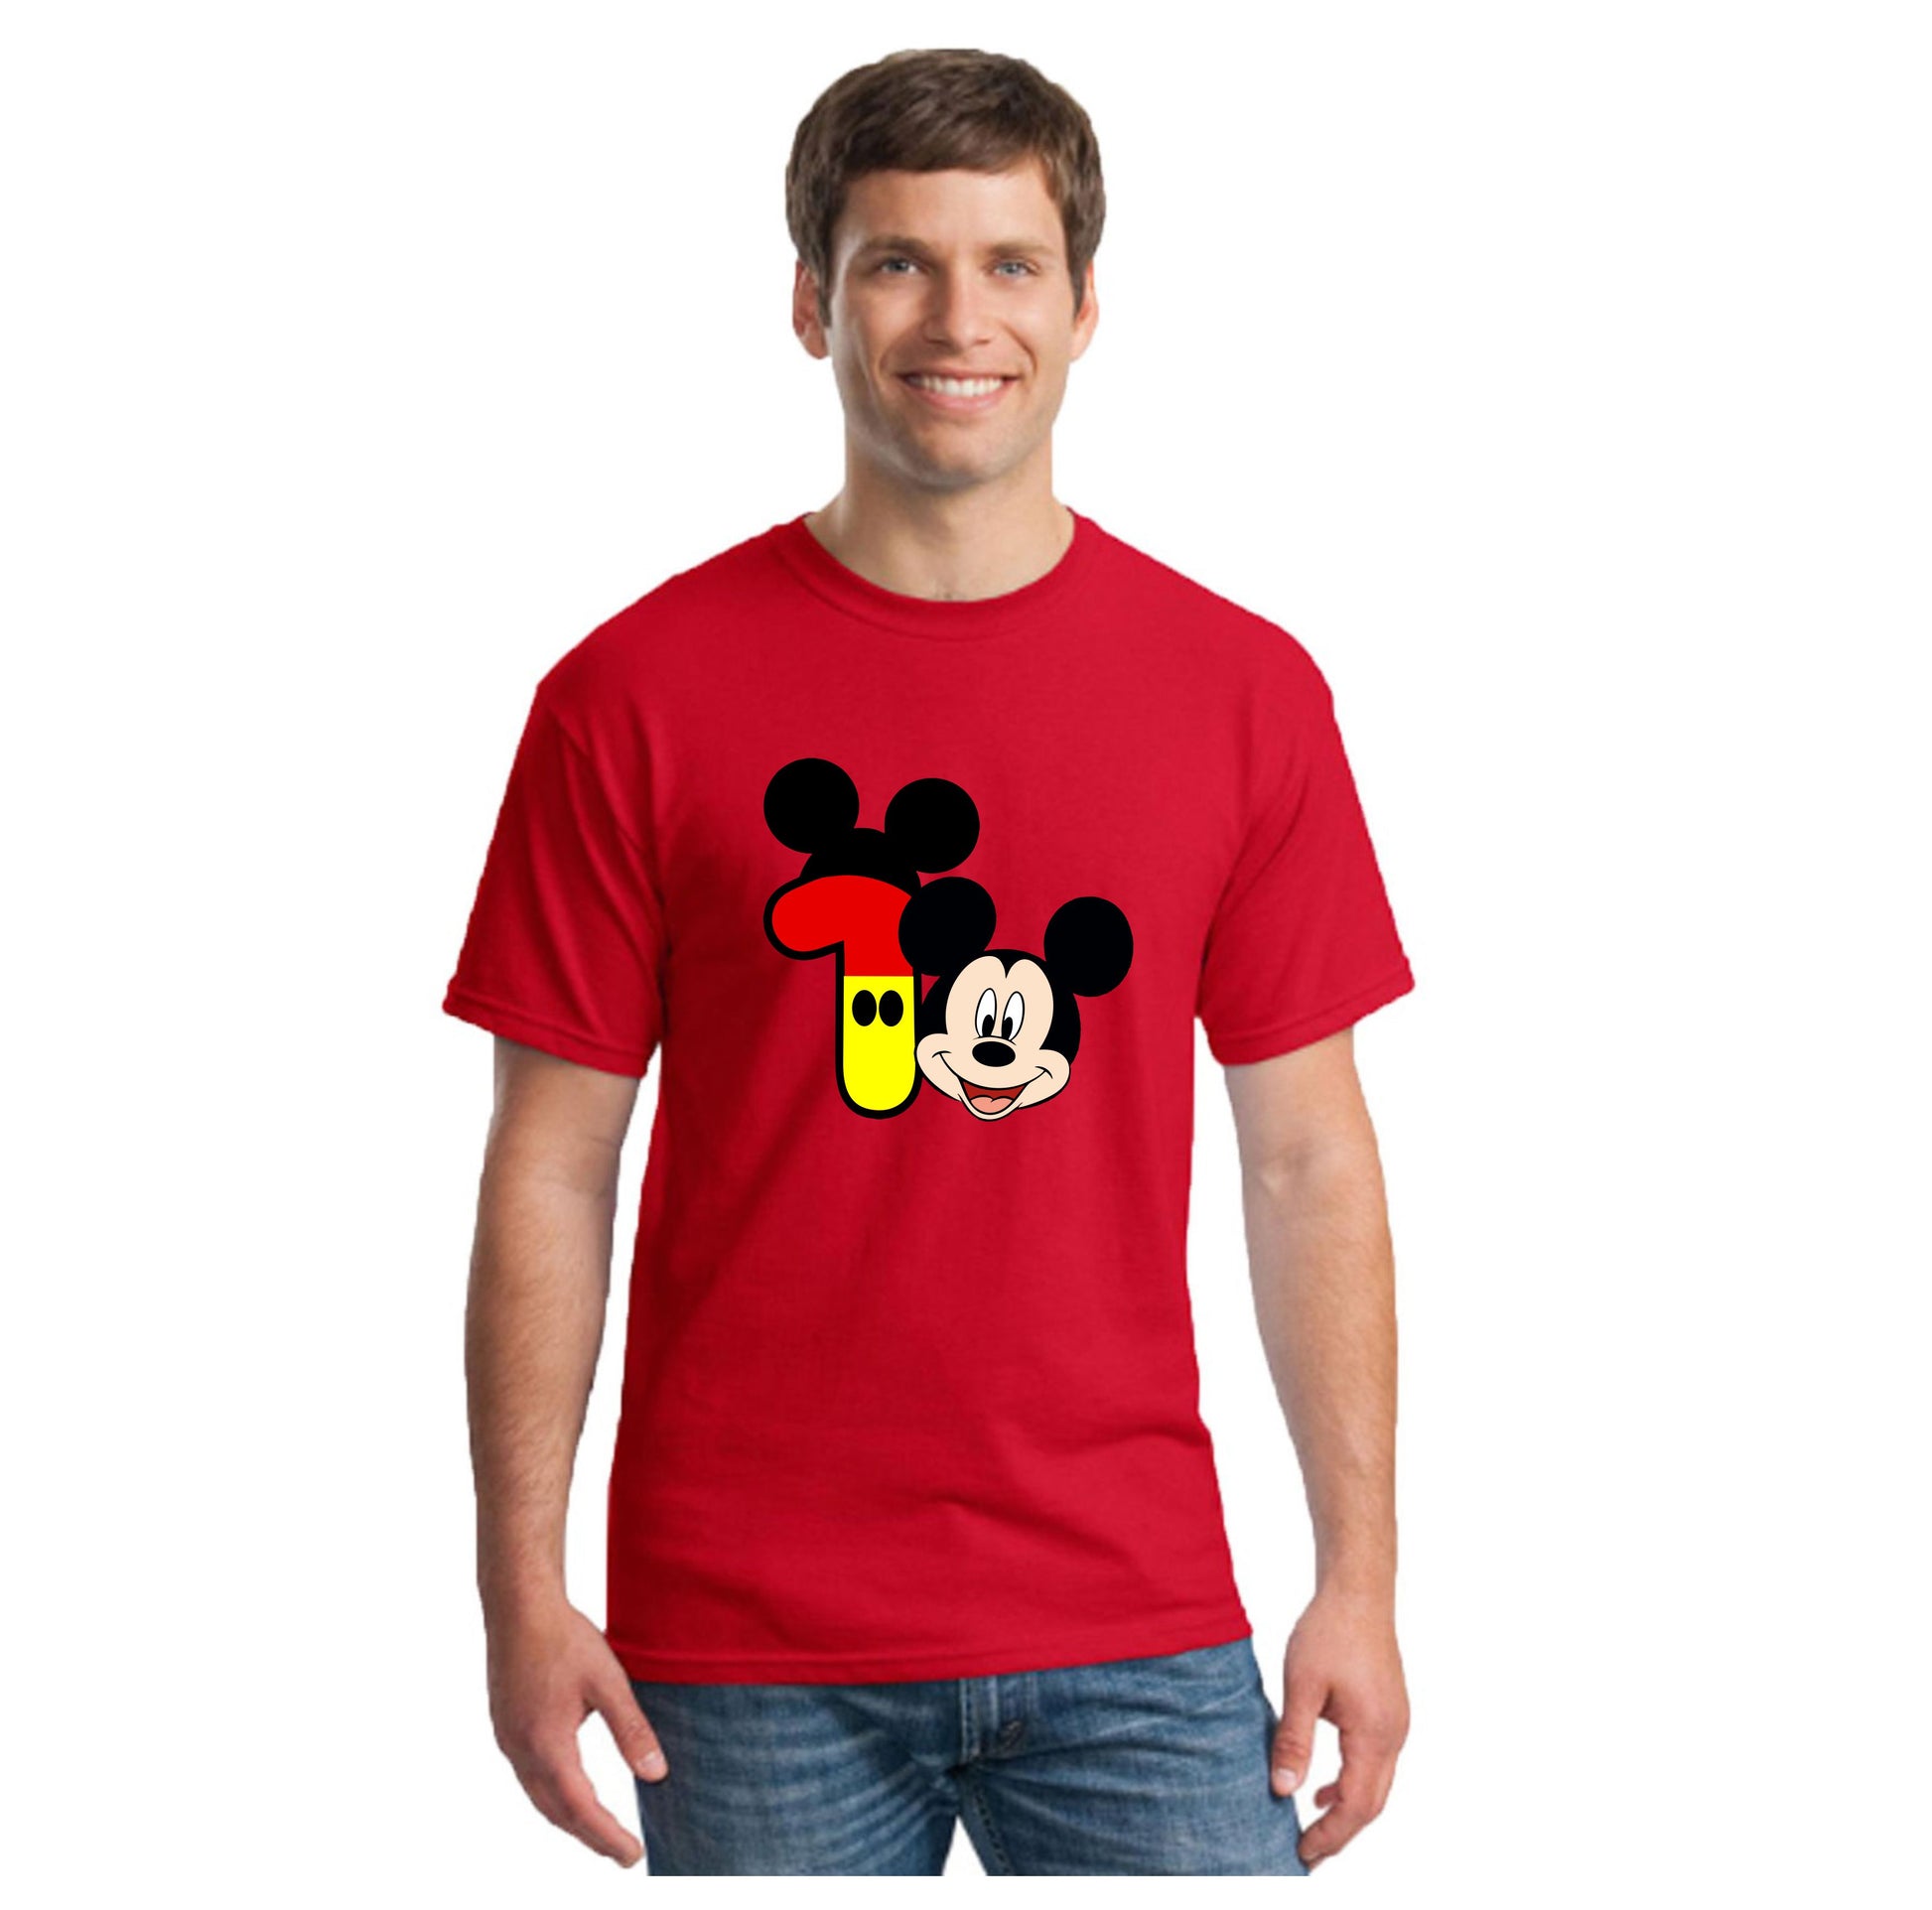 Custom Birthday Family Set Shirt - Mickey Mouse - MYSTYLEMYCLOTHING